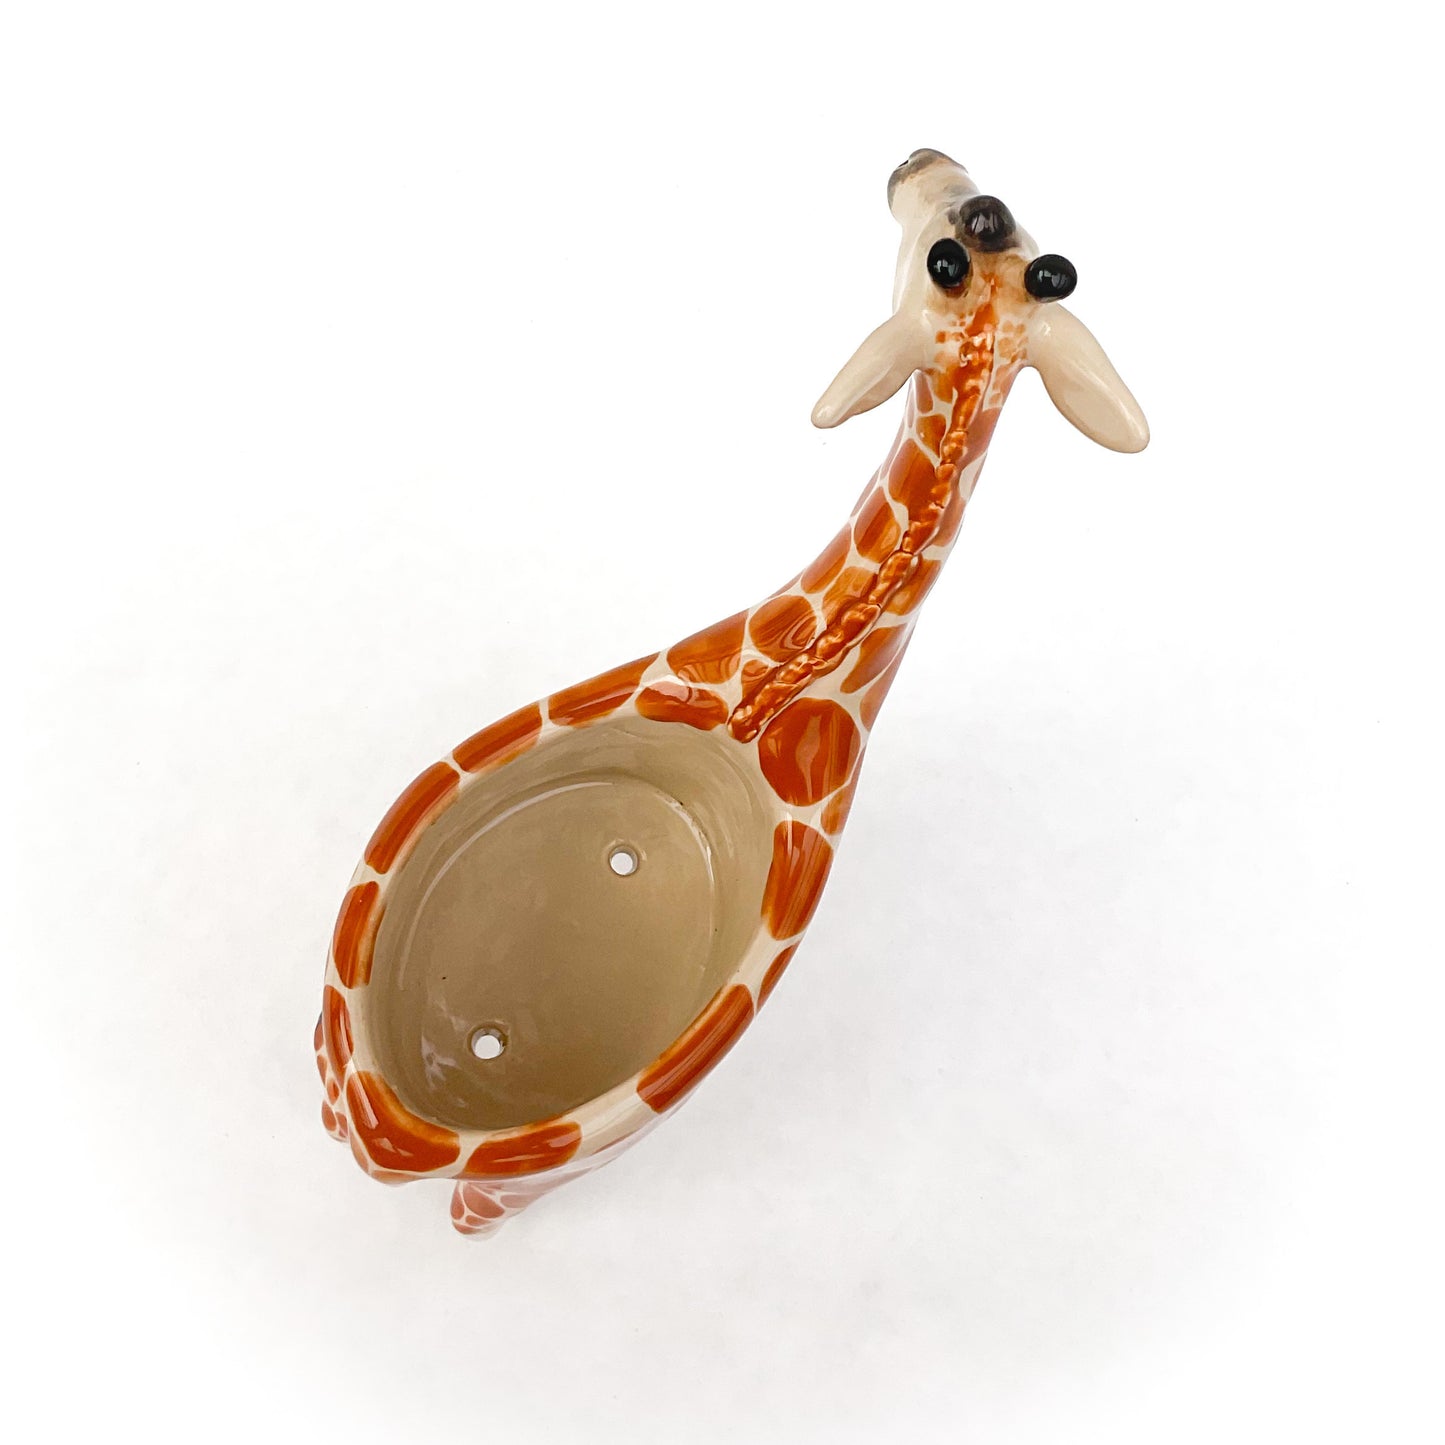 Giraffe Pot - Ceramic Giraffe Planter